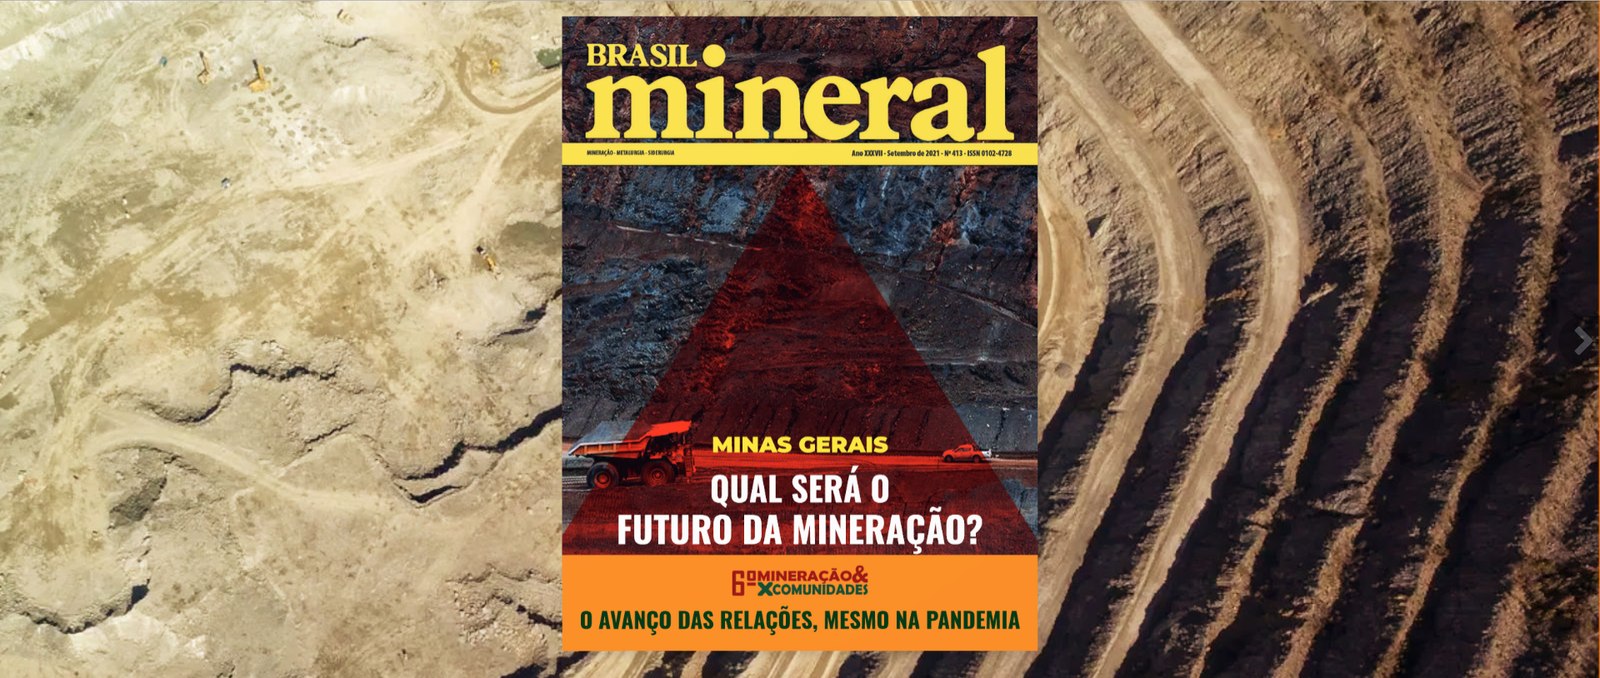 Reportagem na revista Brasil Mineral